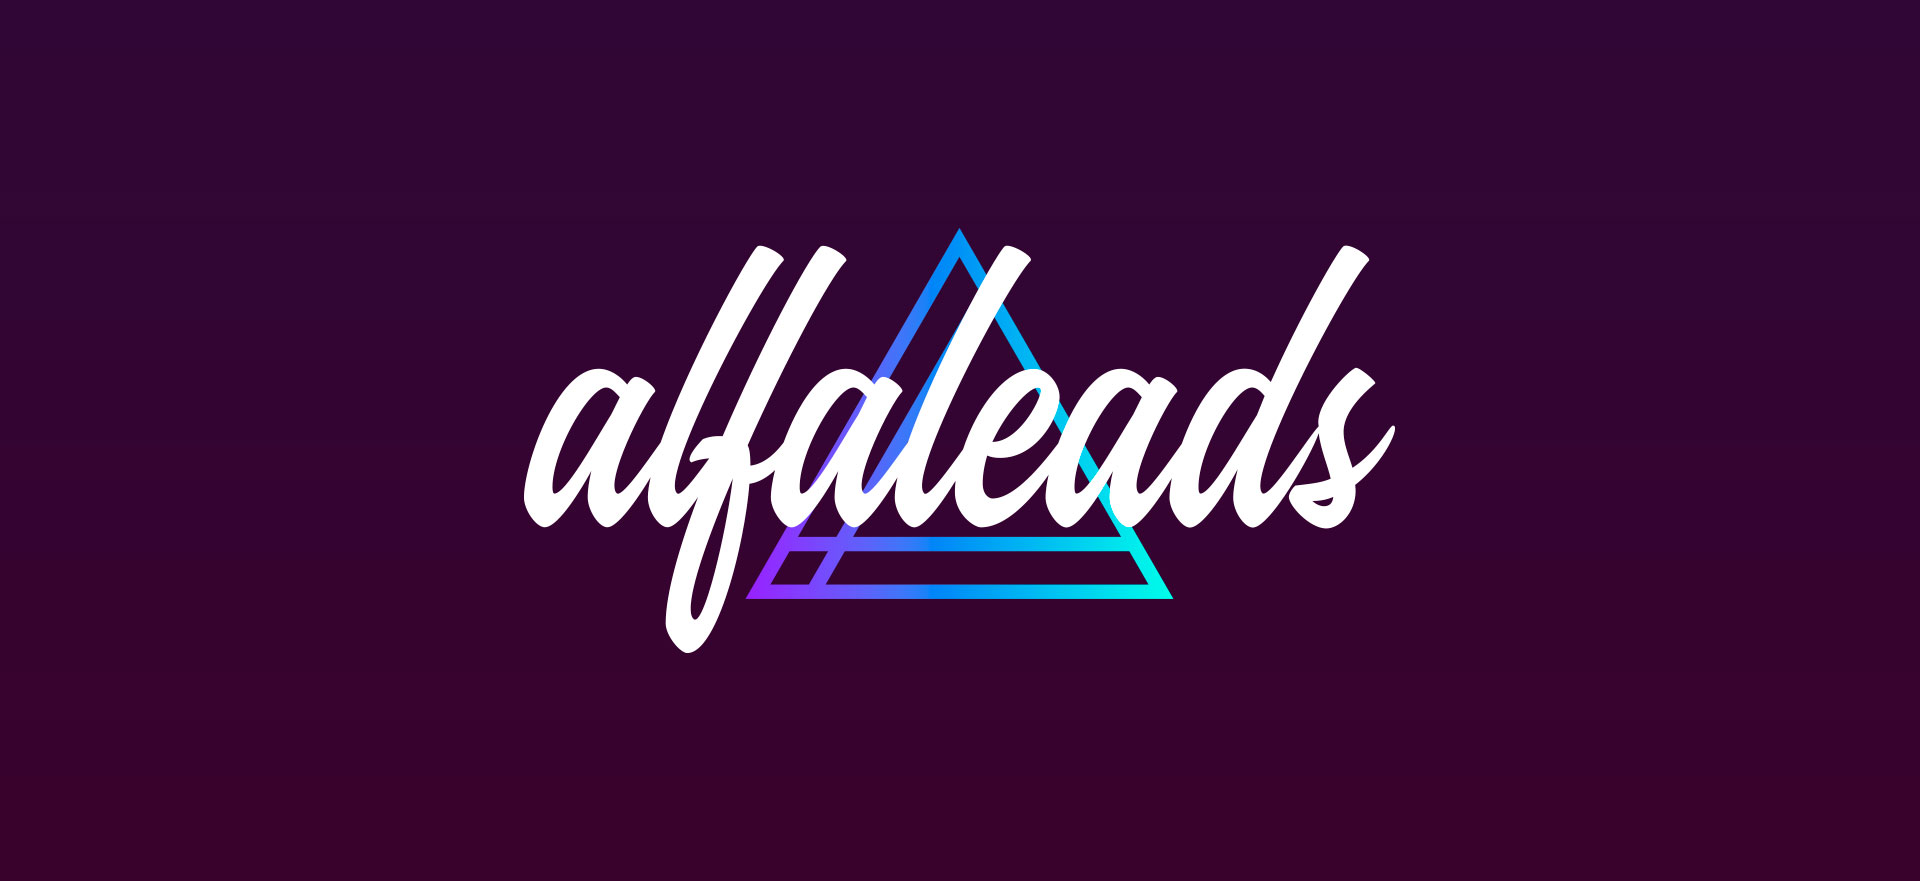 Alpha leads. Альфалид. Alfaleads logo. Affpapa.